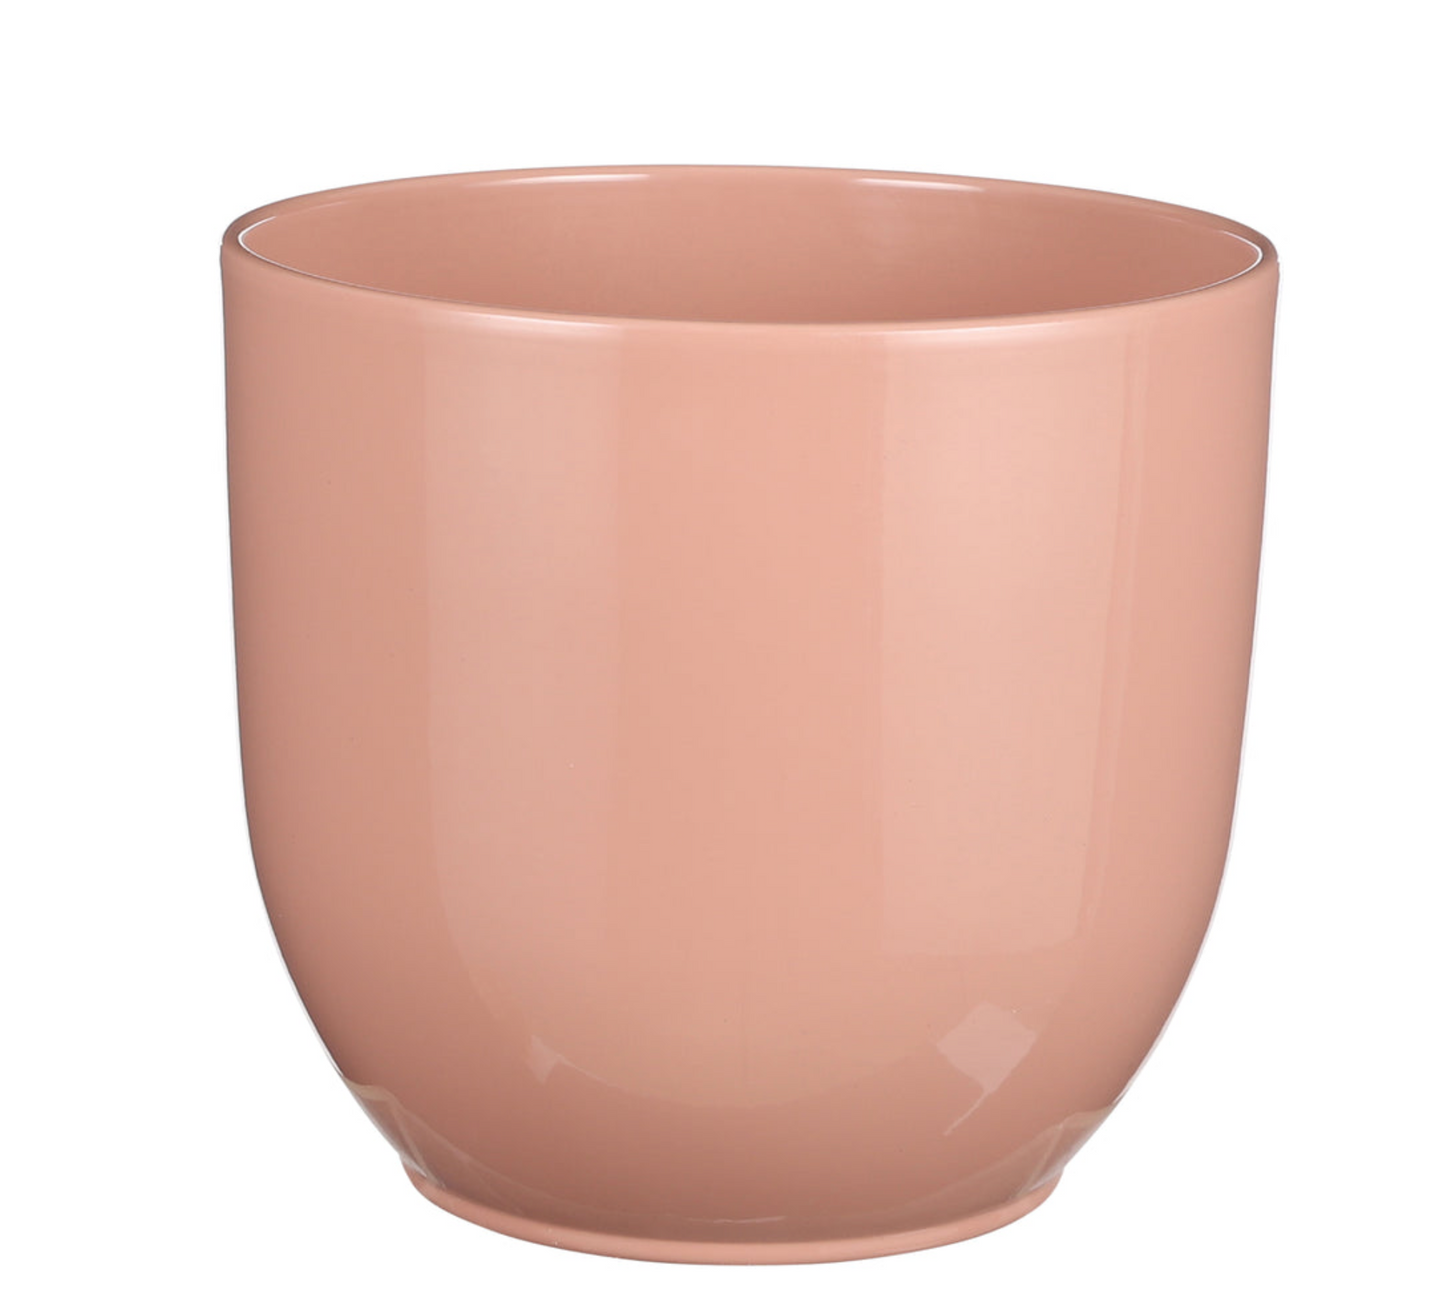 Siena Ceramic Plant Pot, Pink